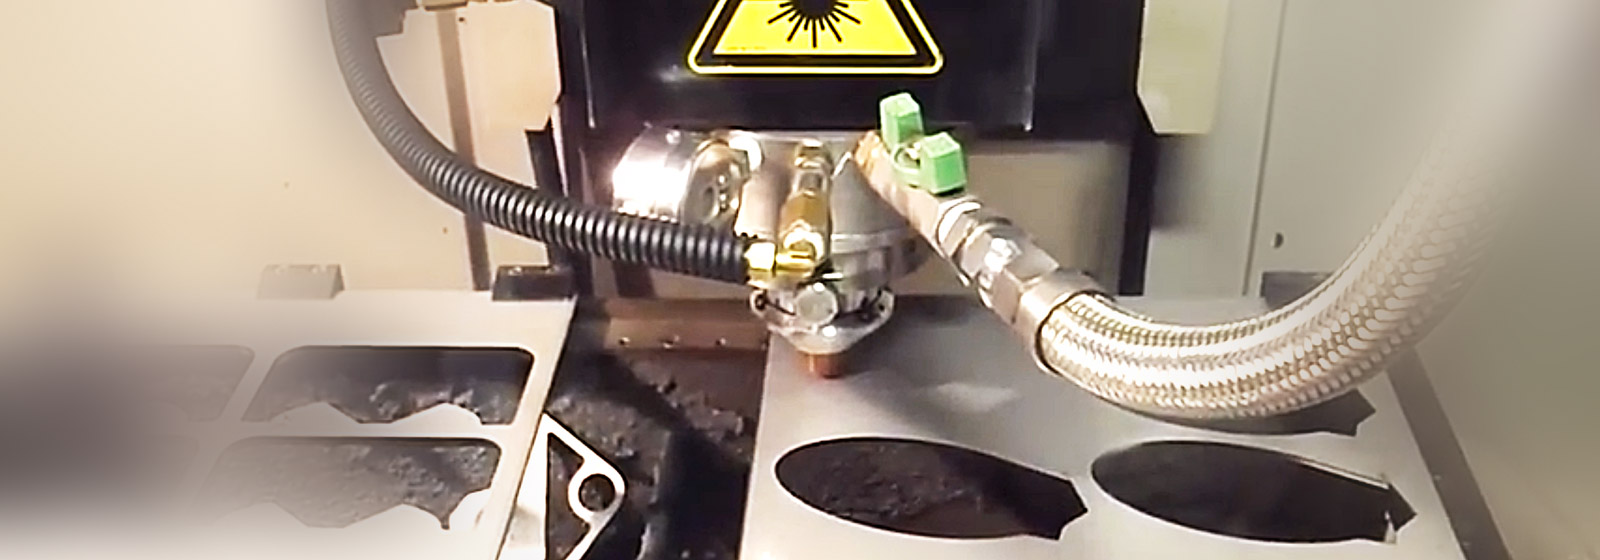 Nozzle of laser cutting machine